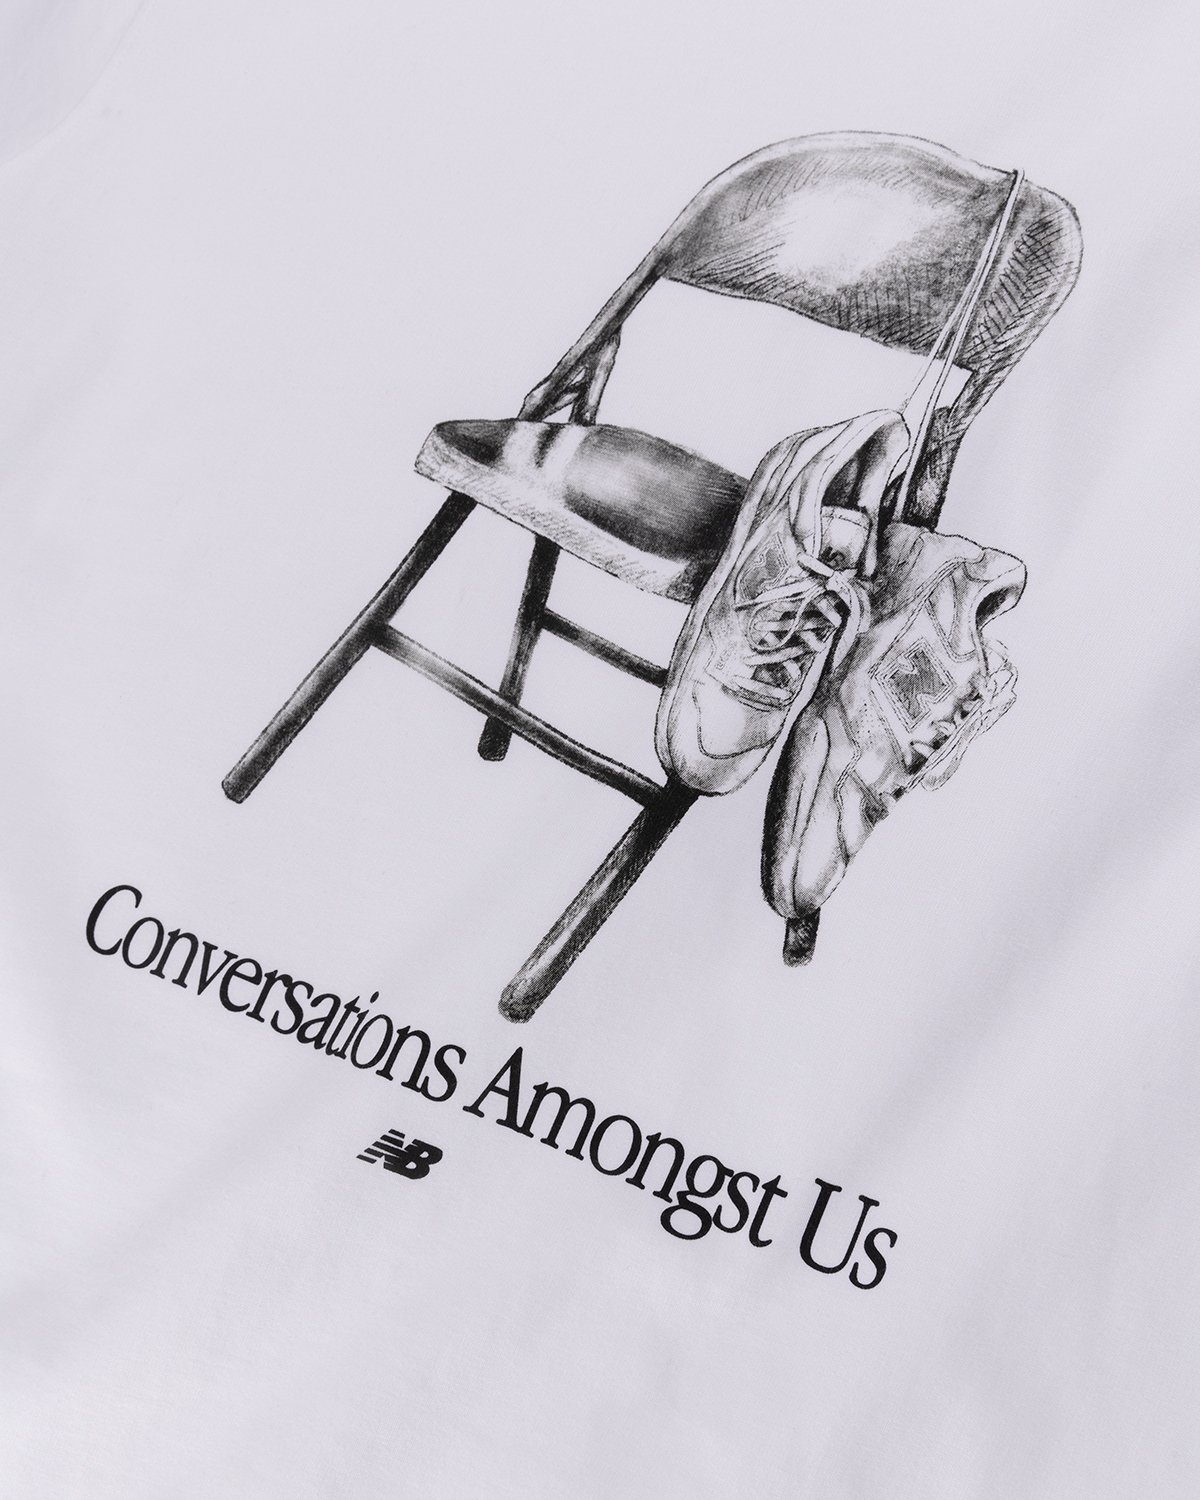 New Balance - Conversations Amongst Us Heavyweight T-Shirt White - Clothing - White - Image 5